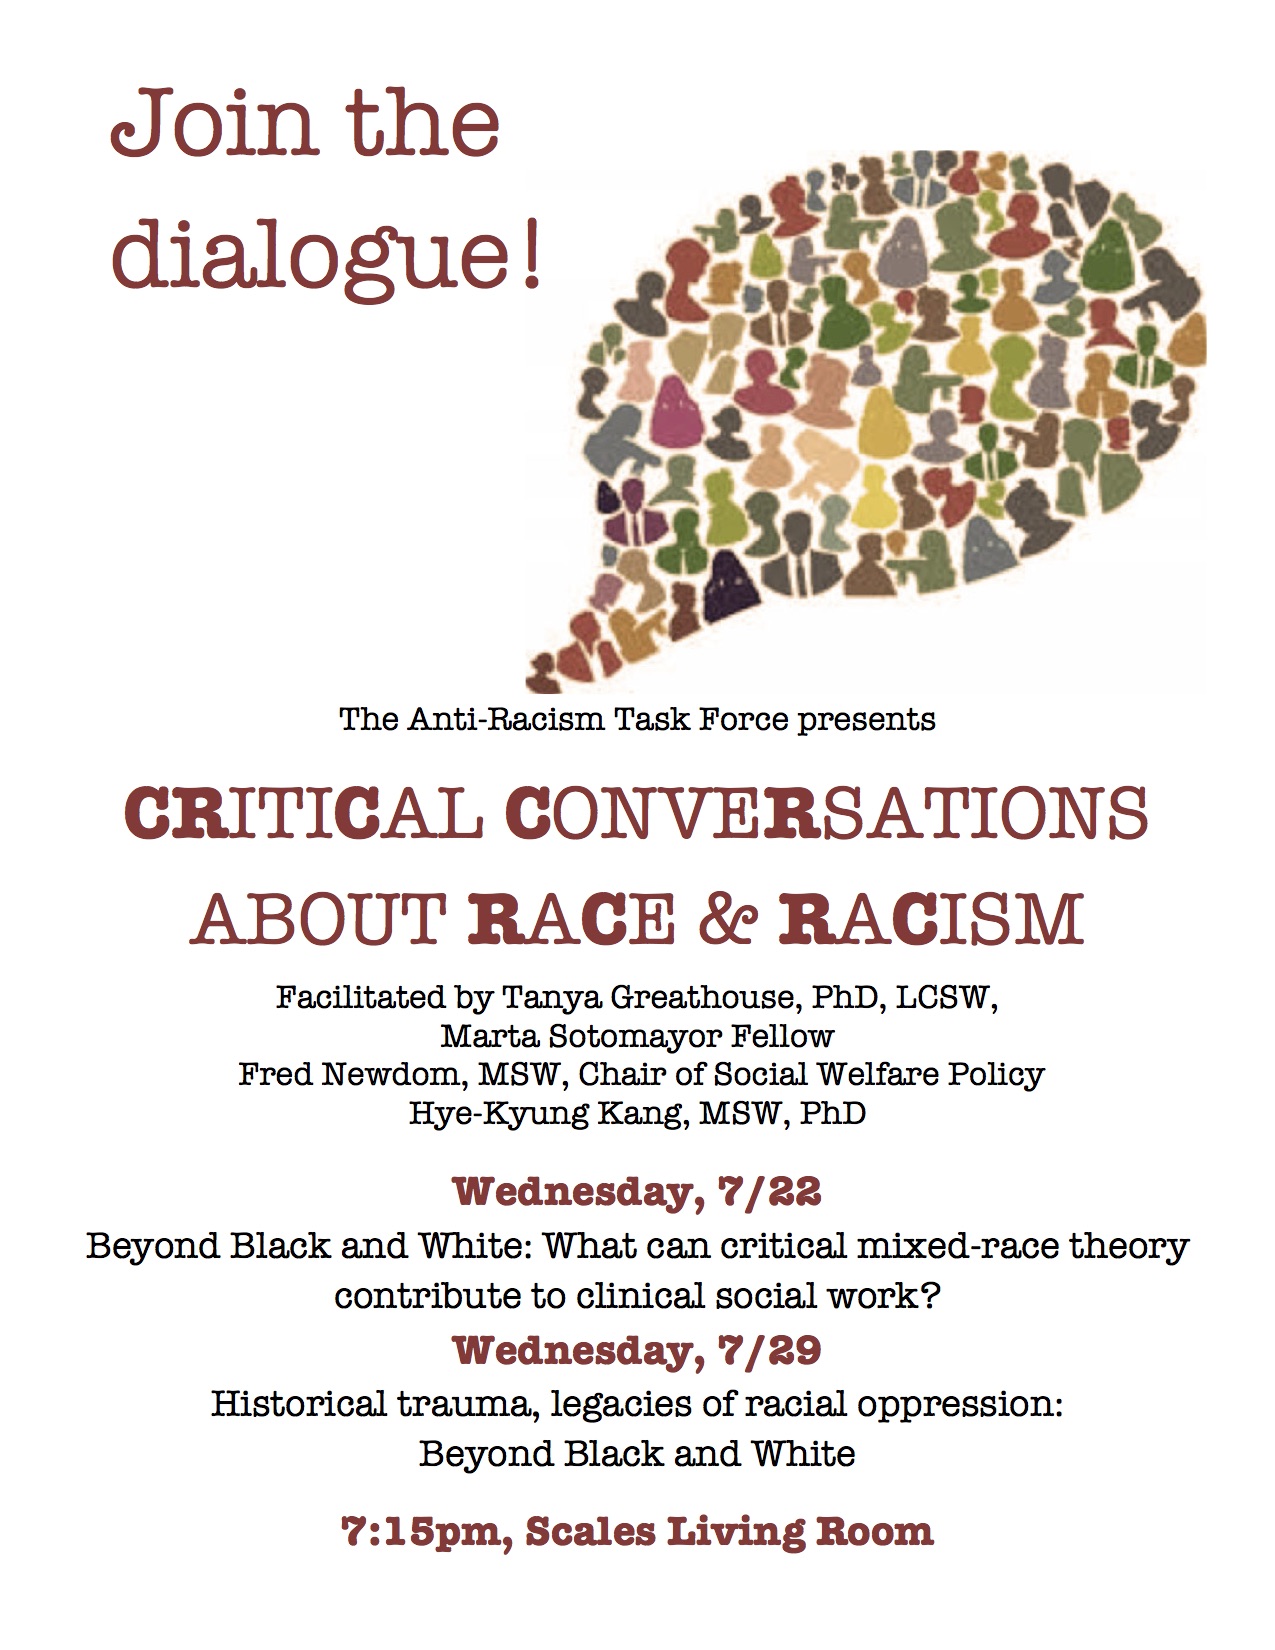 Historical trauma, legacies of racial oppression: Beyond Black and White (7/29, 7:15 pm)